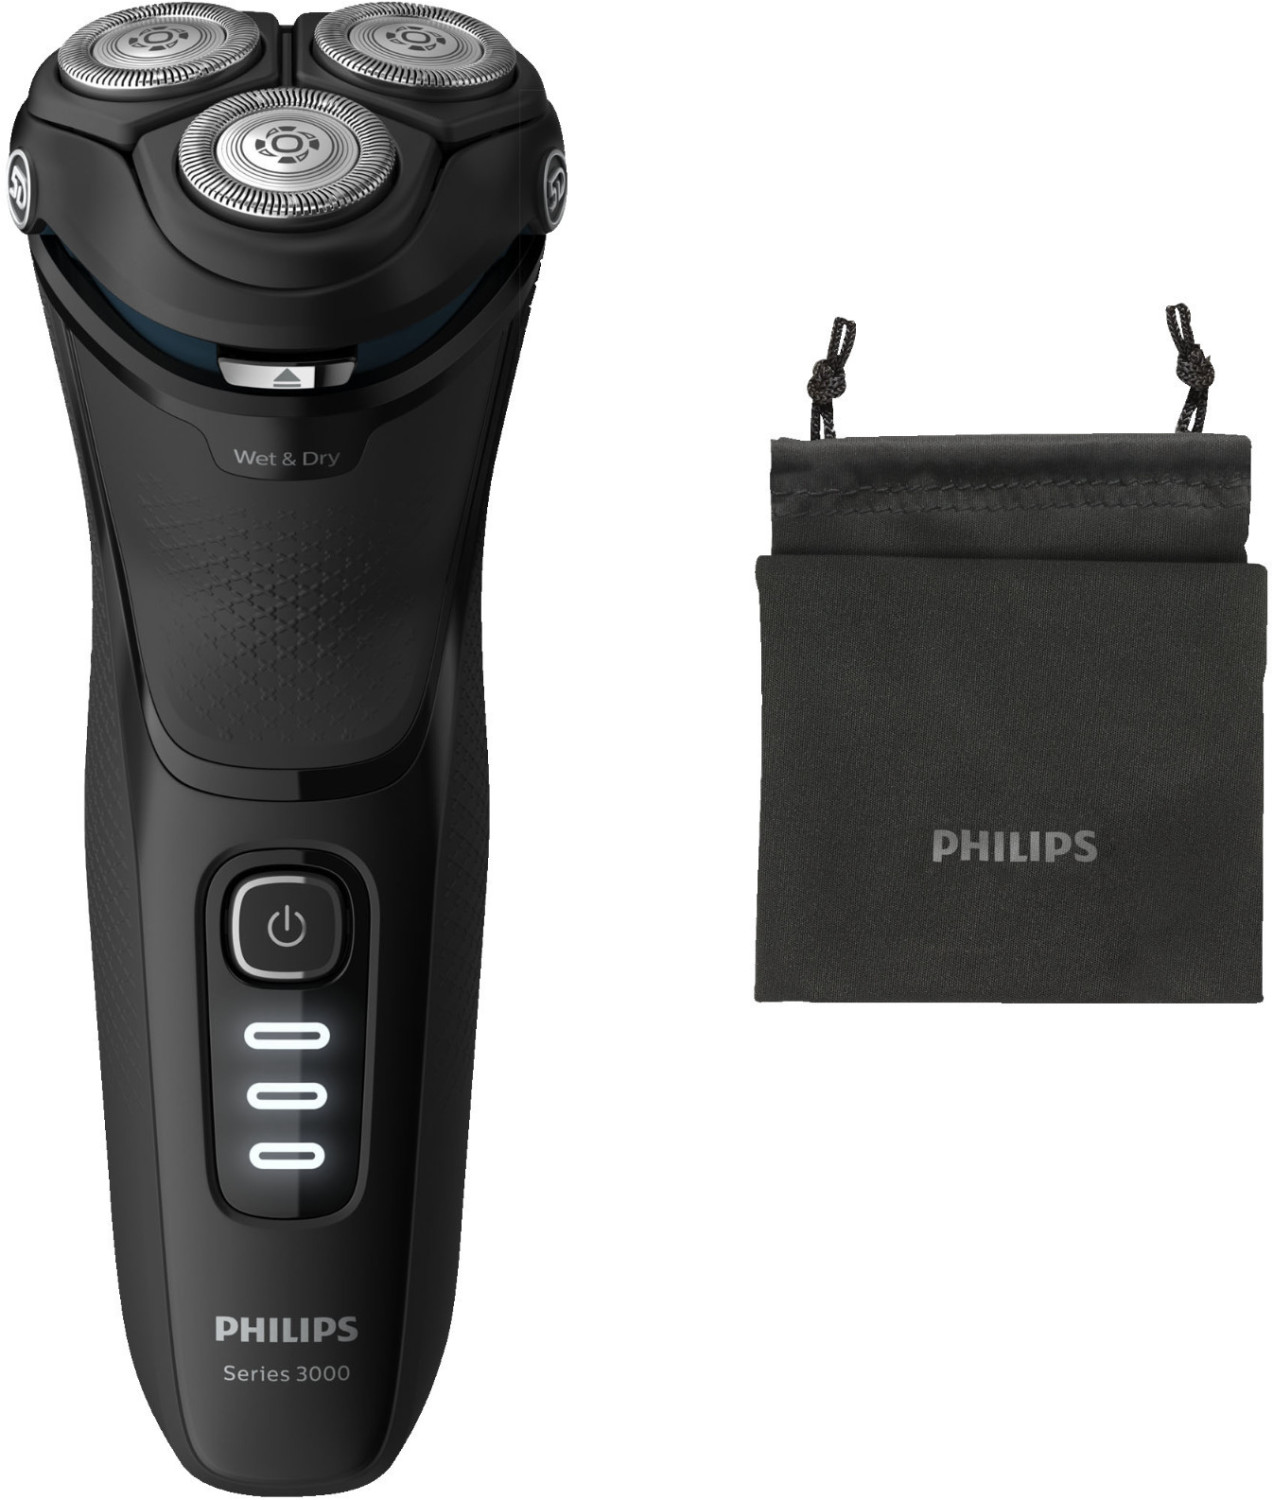 Philips S3233/52 Series 3000